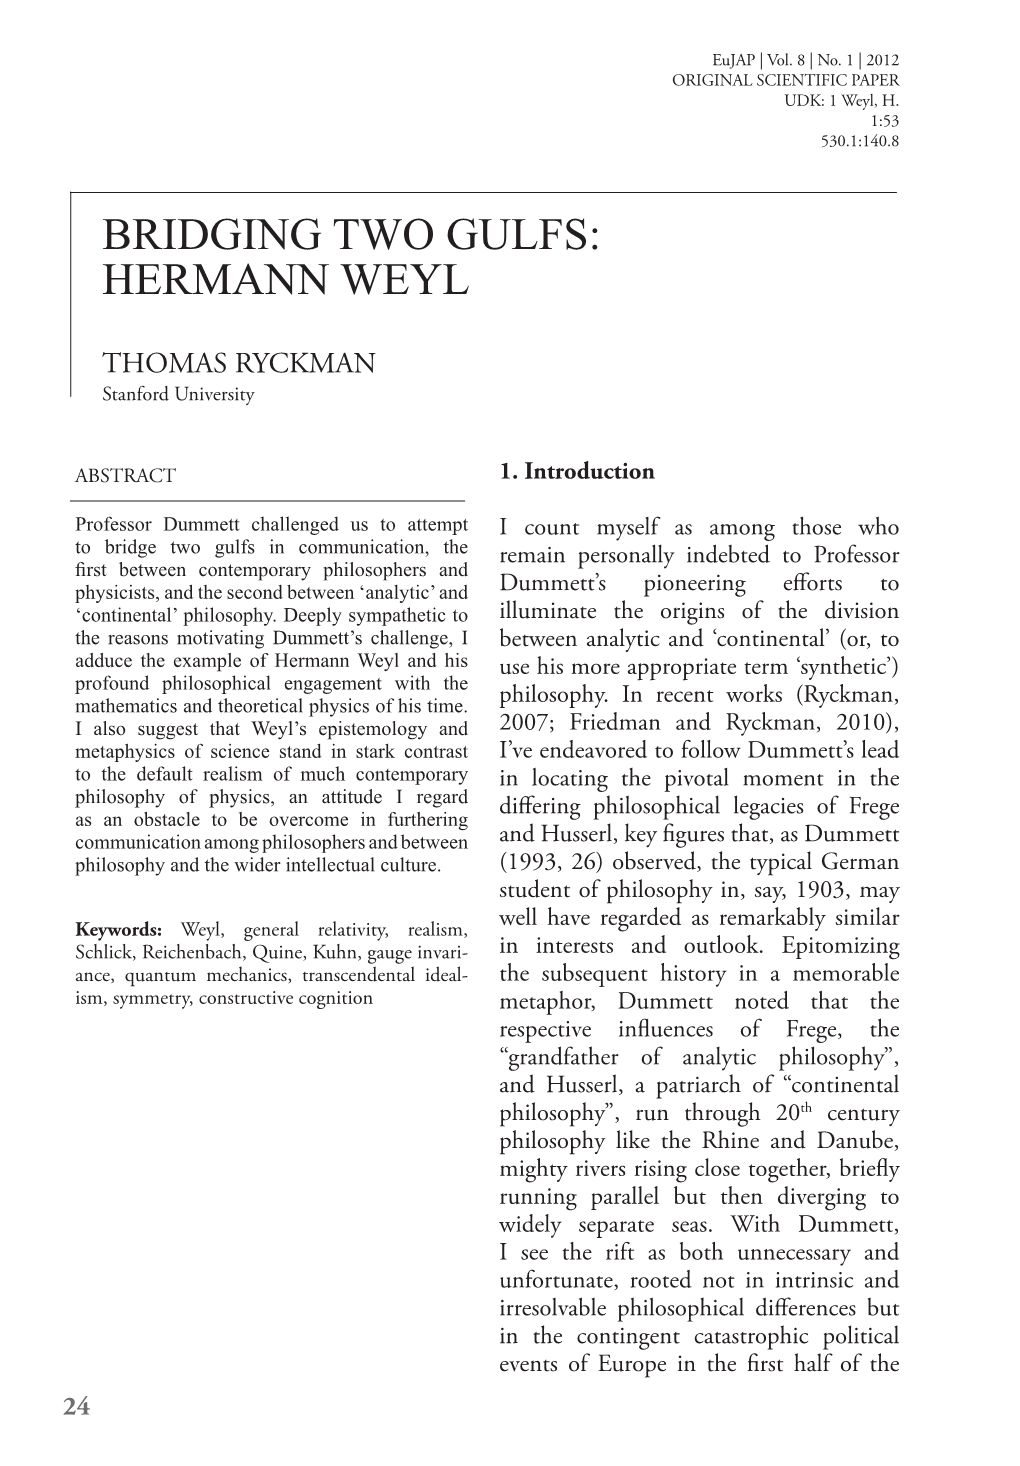 Bridging Two Gulfs: Hermann Weyl